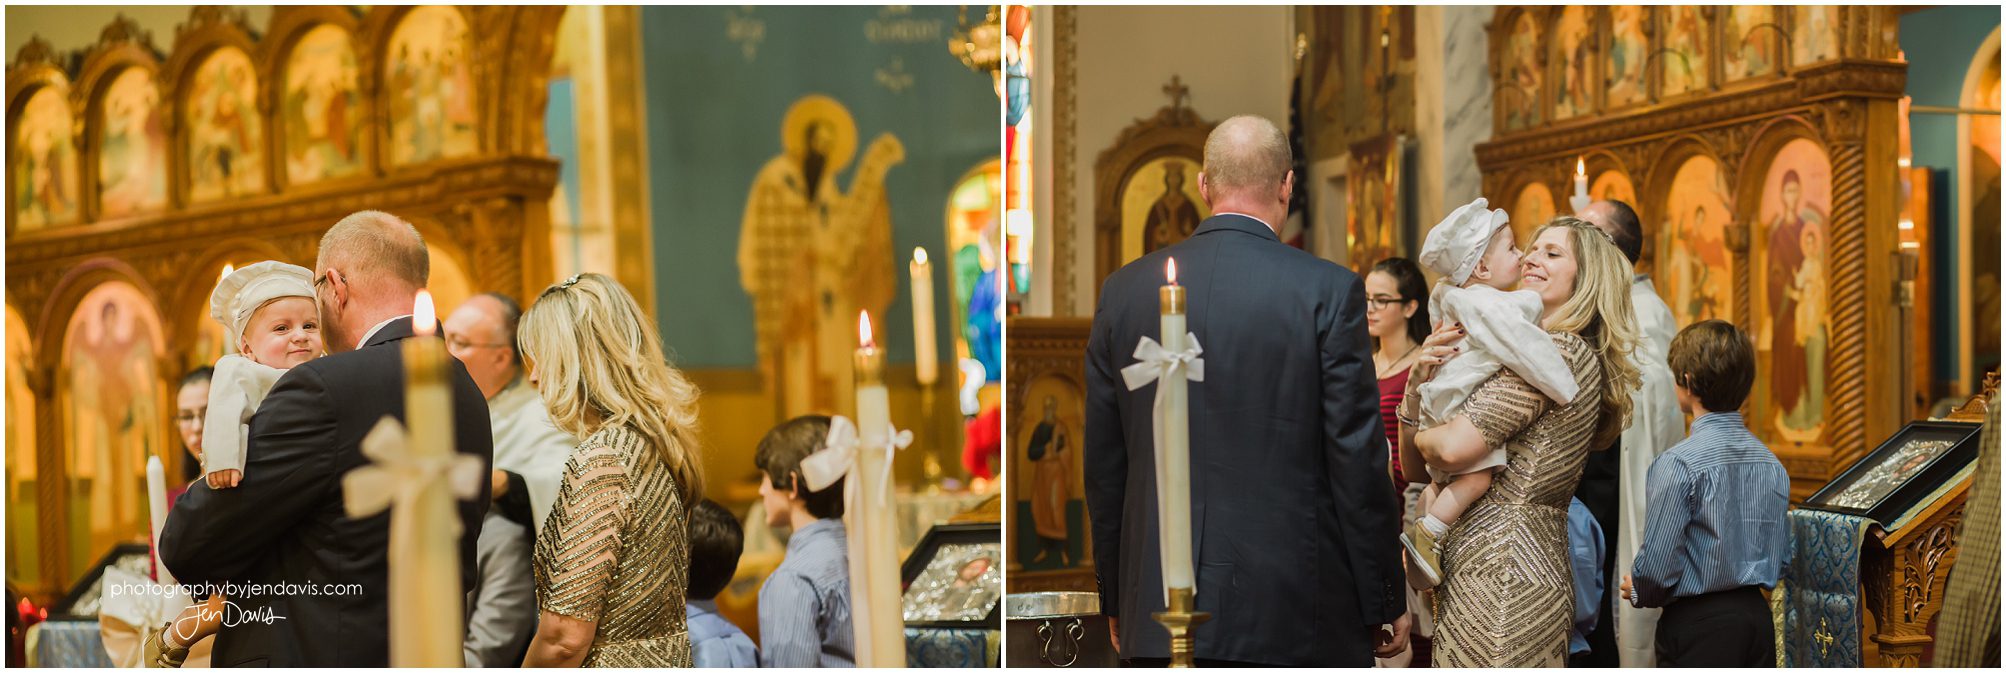 Details of Greek Baptism service and reception